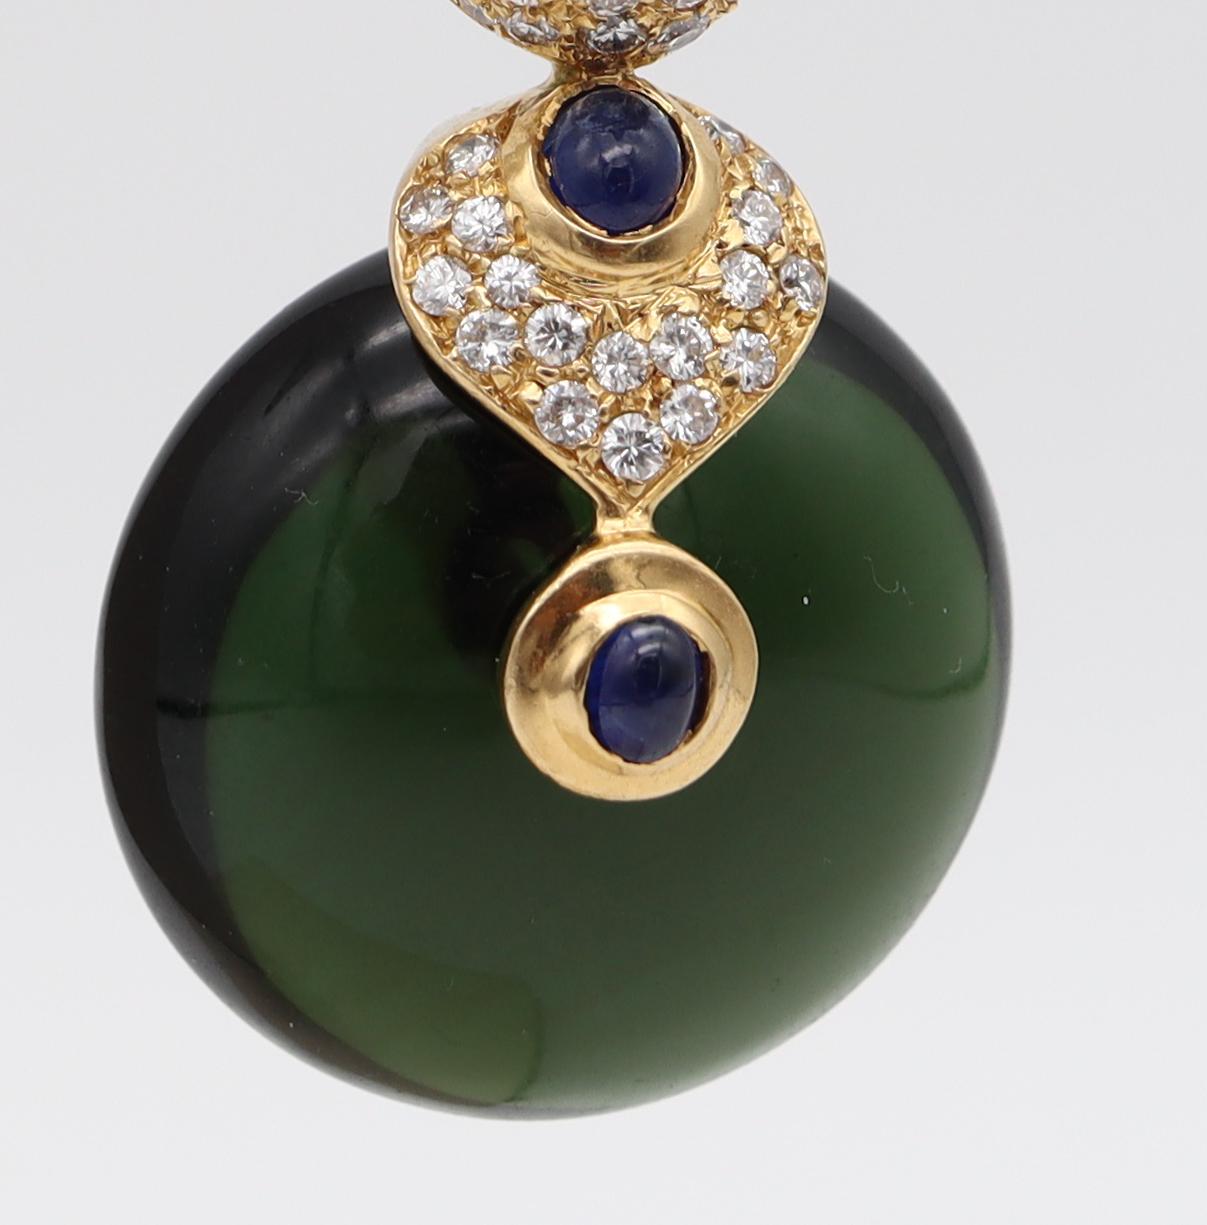 Brilliant Cut Contemporary Italian Pneus Drop Earrings in 18Kt Gold 92.63 Ctw Diamonds & Gems